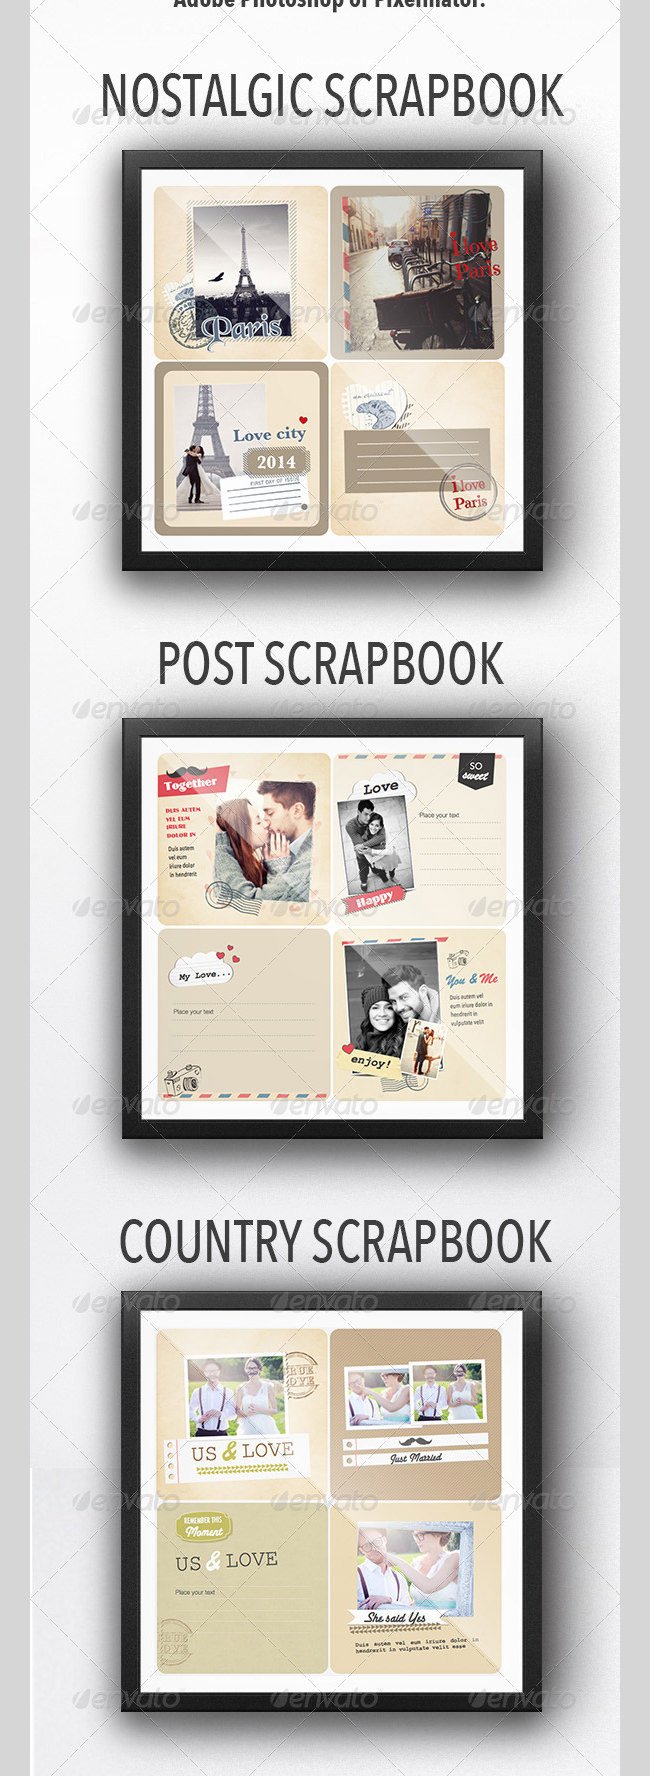 10+ Scrapbook Ideas  Boyfriend scrapbook, Romantic scrapbook